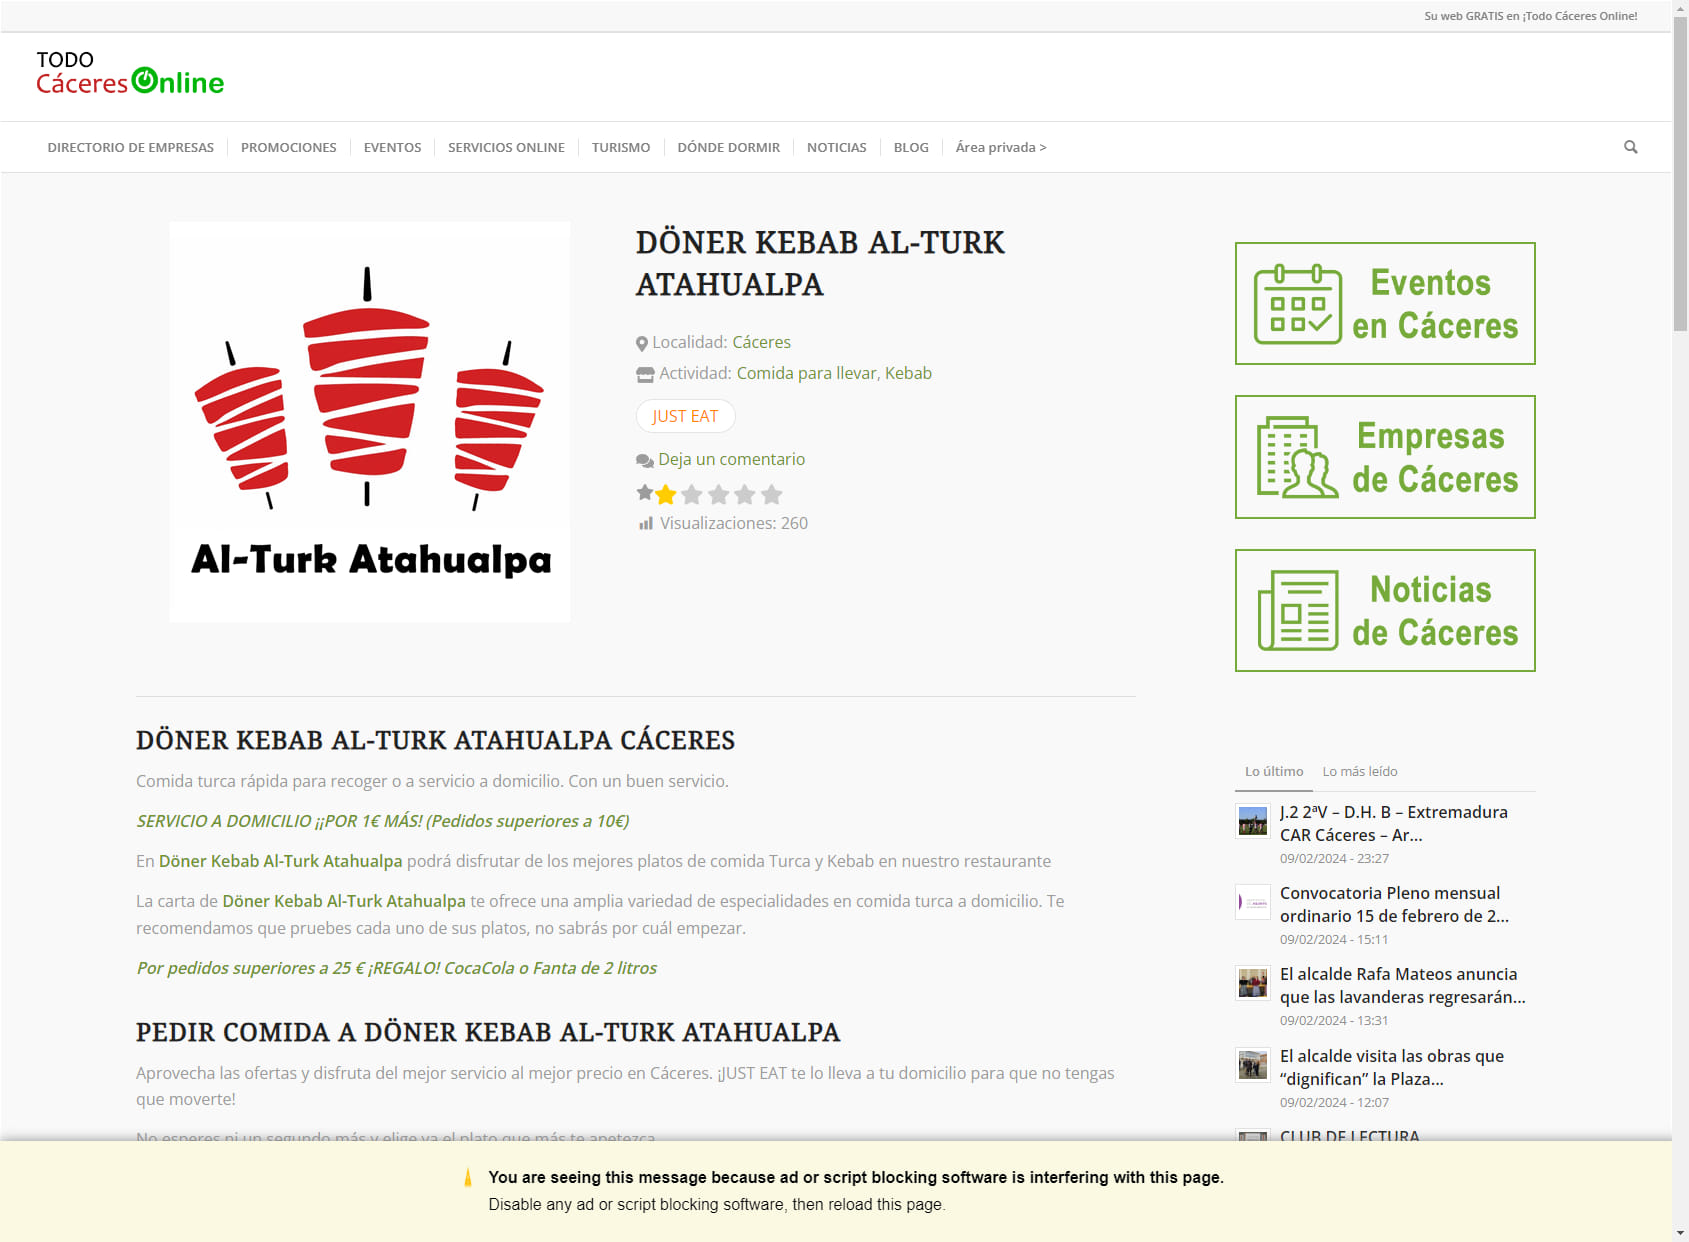 Al-Turk Donner Kebab